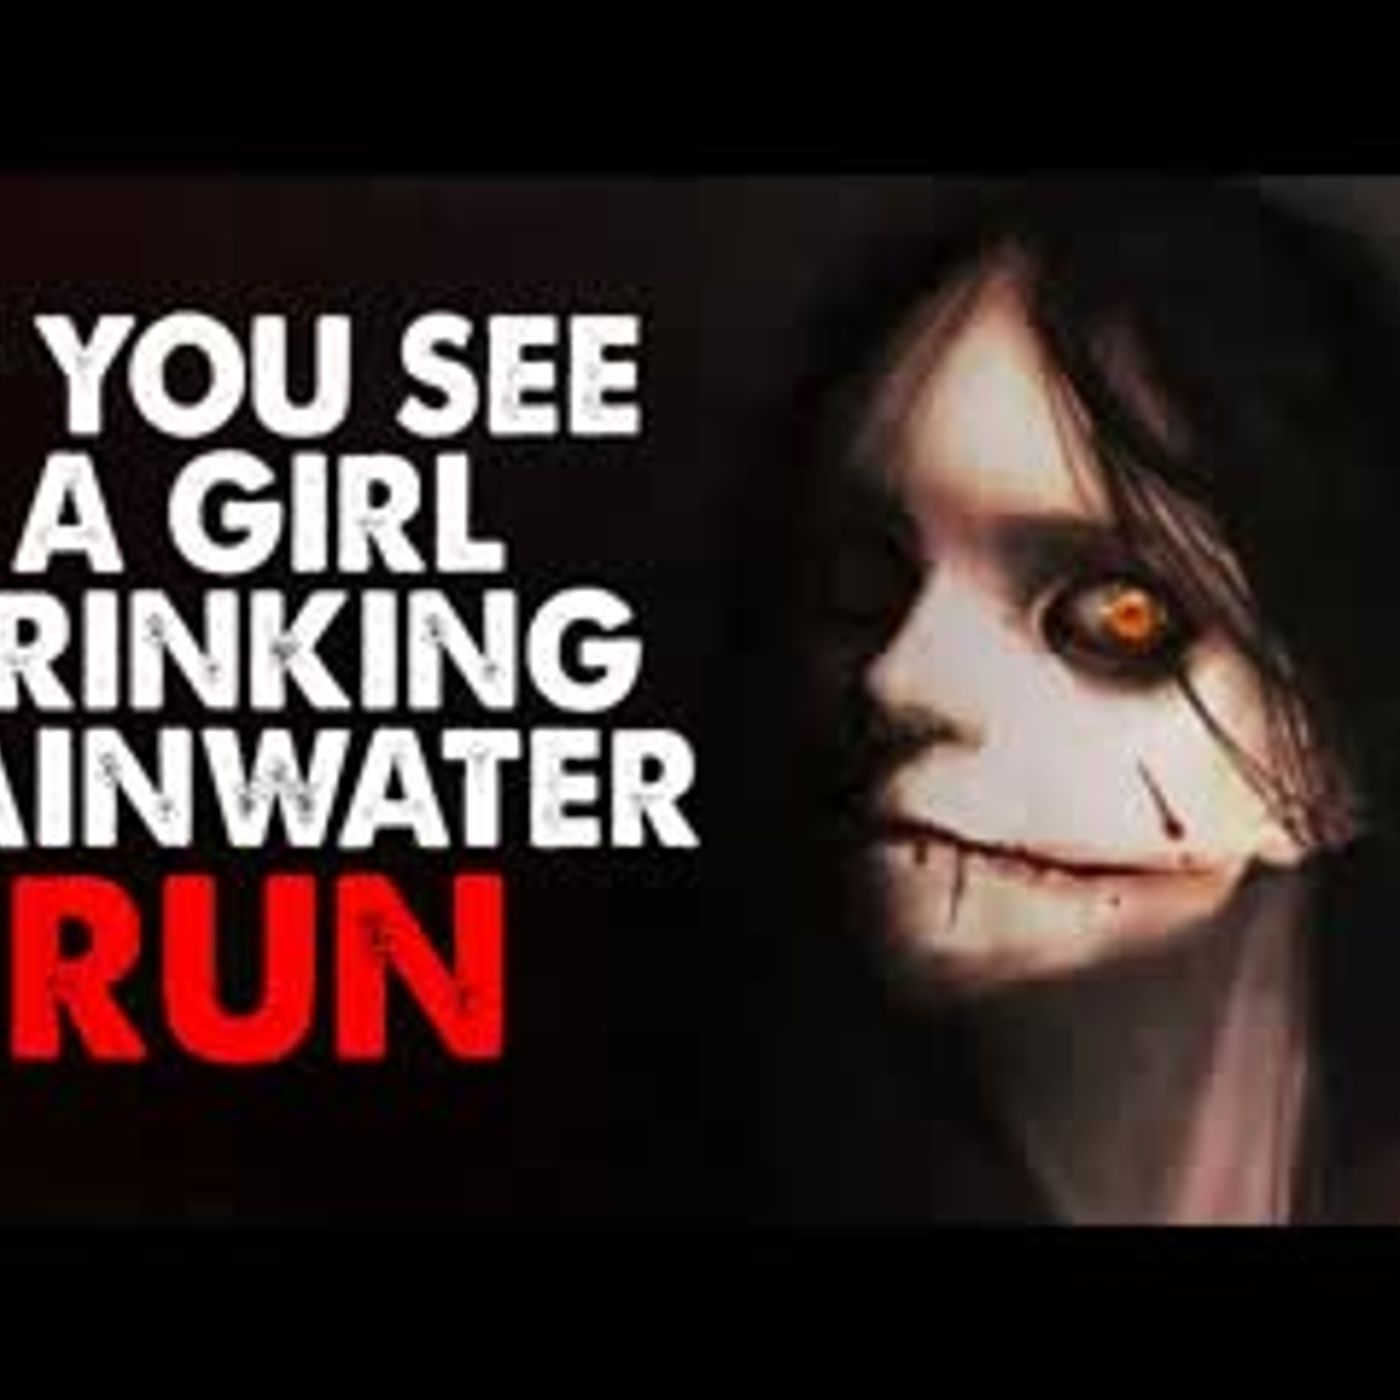 ”If you see a girl drinking rainwater, run” Creepypasta